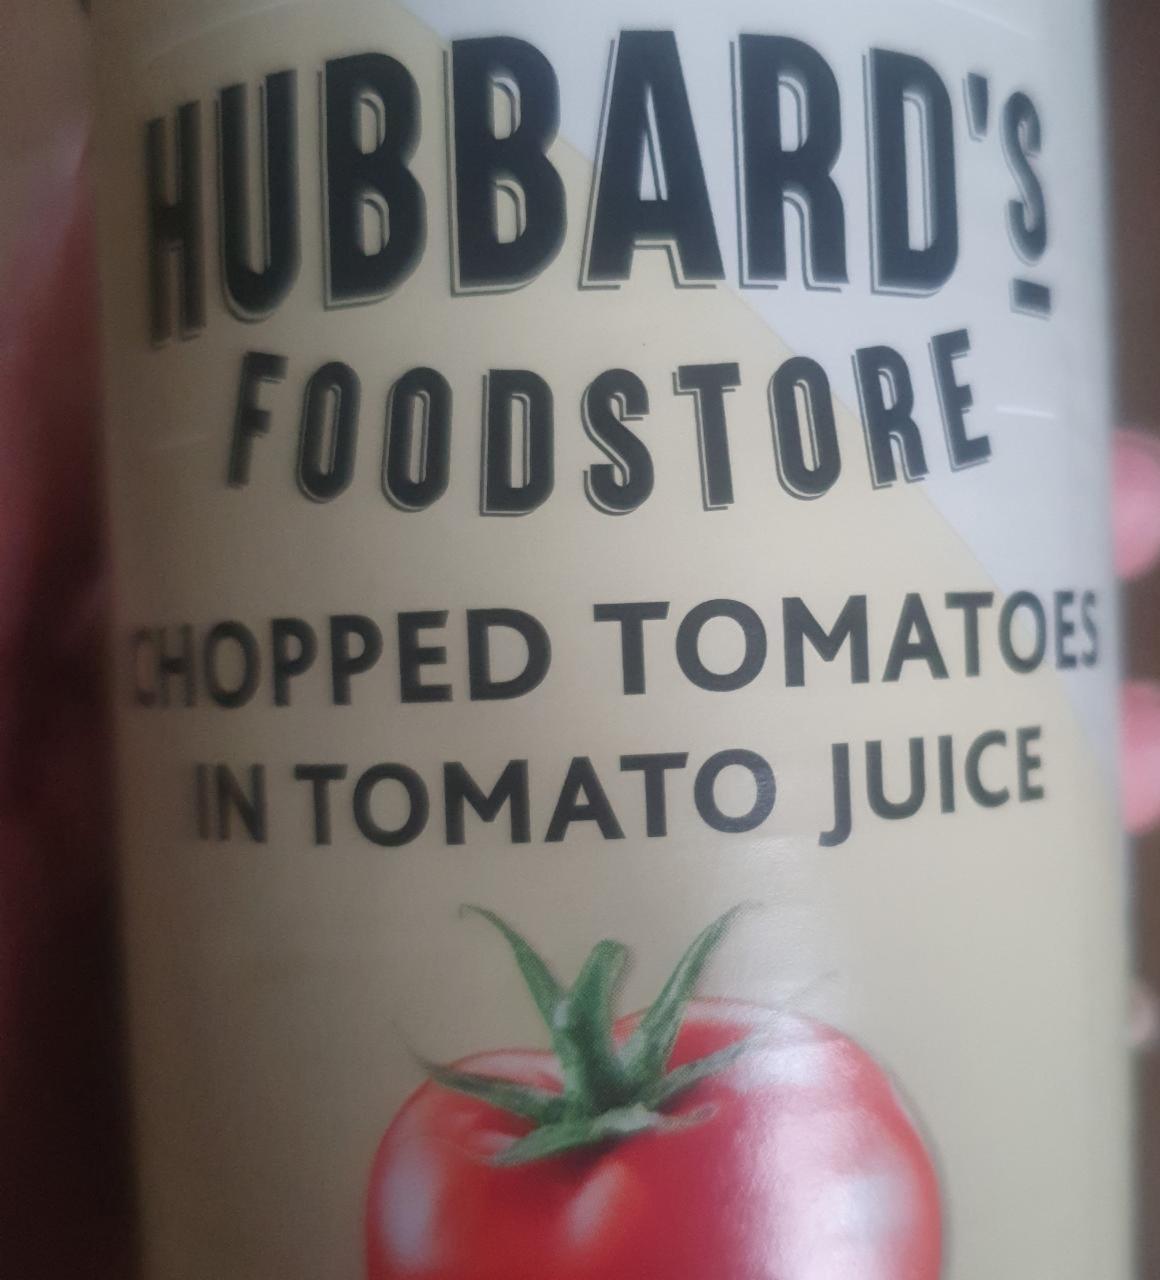 Fotografie - Chopped tomatoes in tomato juice Hubbard's Foodstore